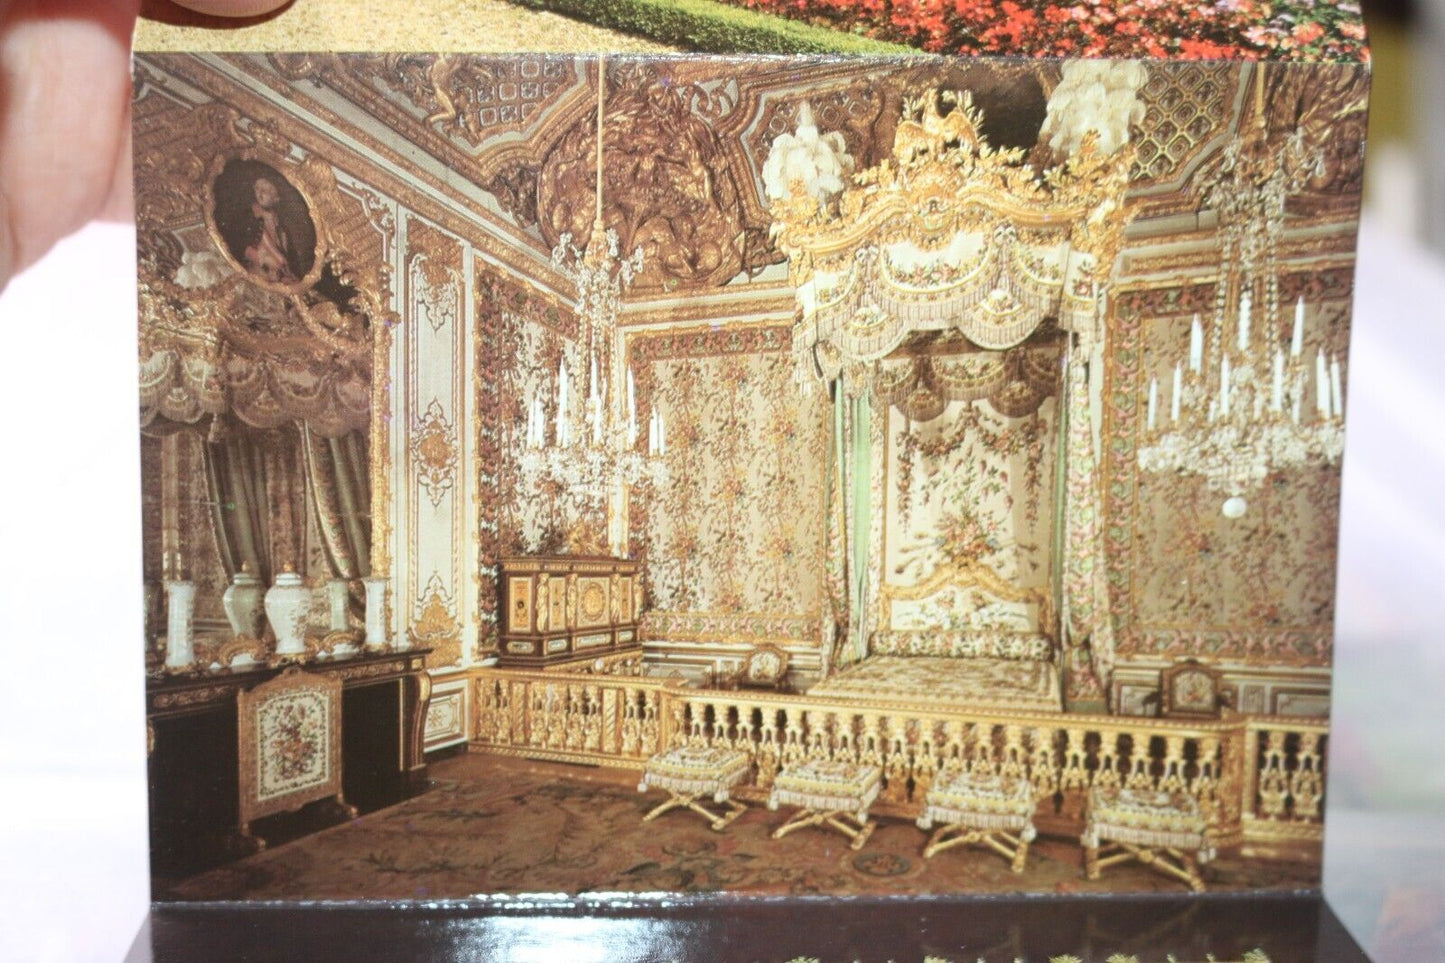 Vintage Post Card Versailles Voyage Travel Church Église Pictures Photos Collect